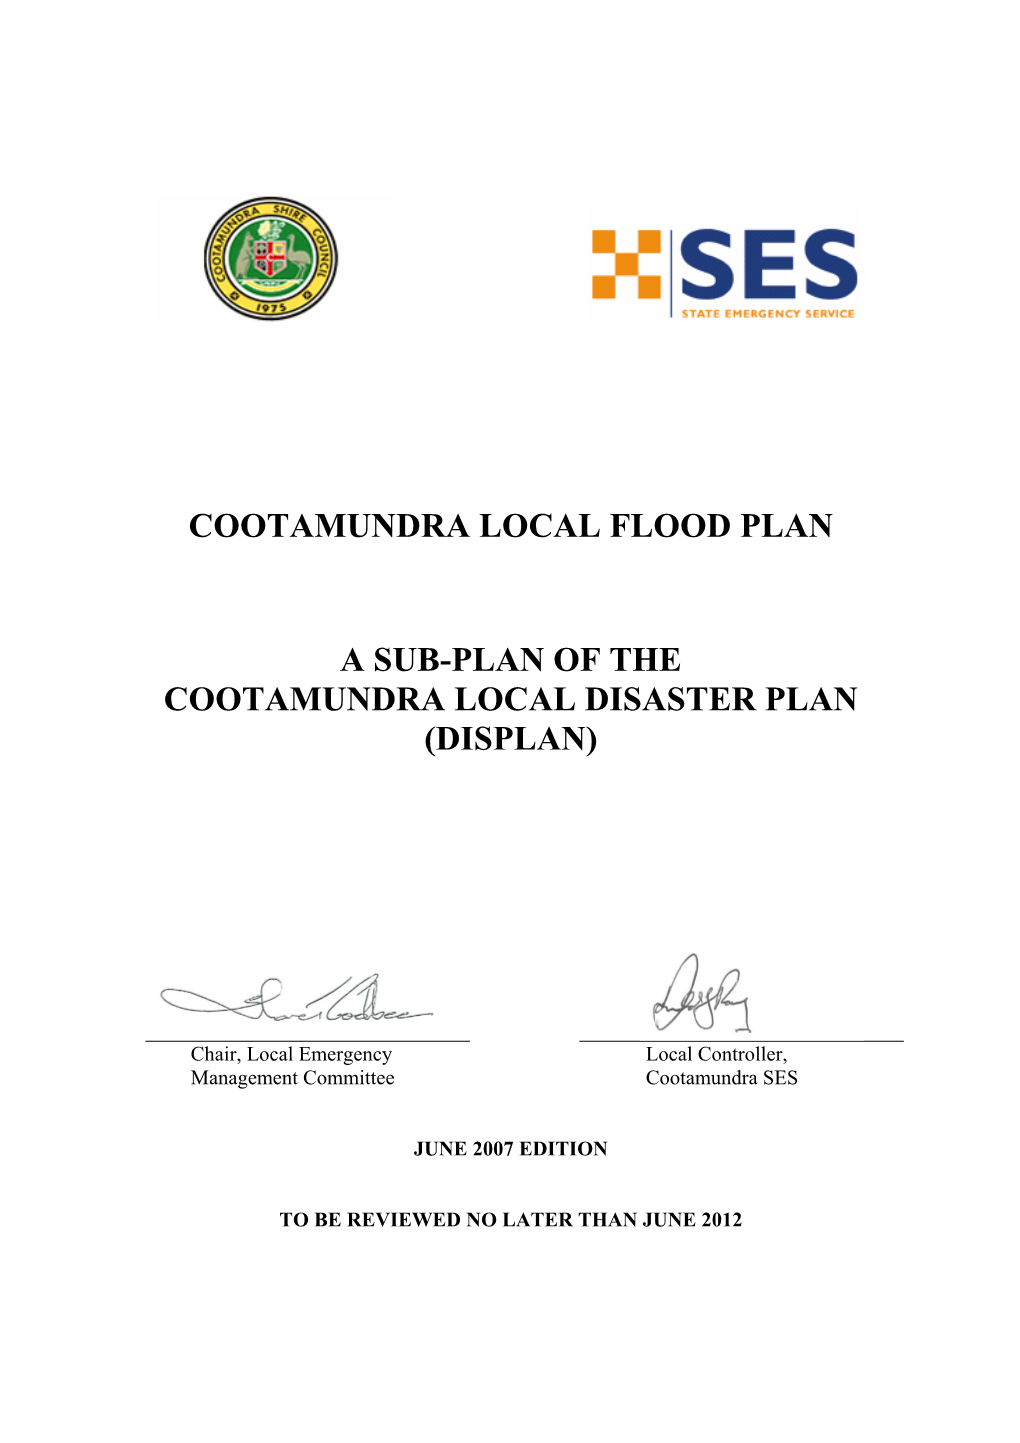 Cootamundra Local Flood Plan a Sub-Plan of The